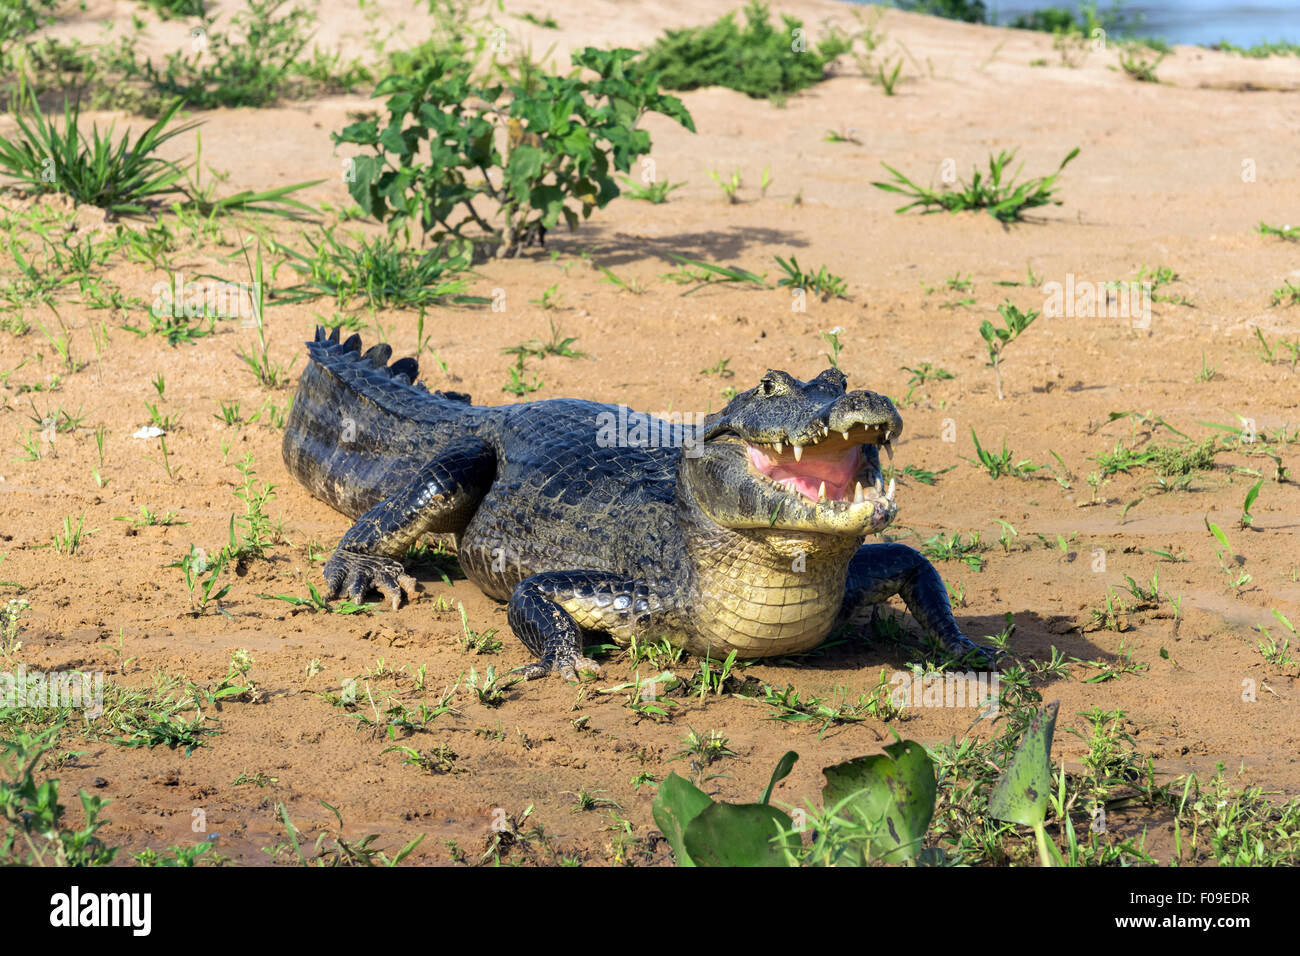 Big smile, caiman on a sand bar, Rio Cuiaba, Pantanal, Brazil Stock Photo